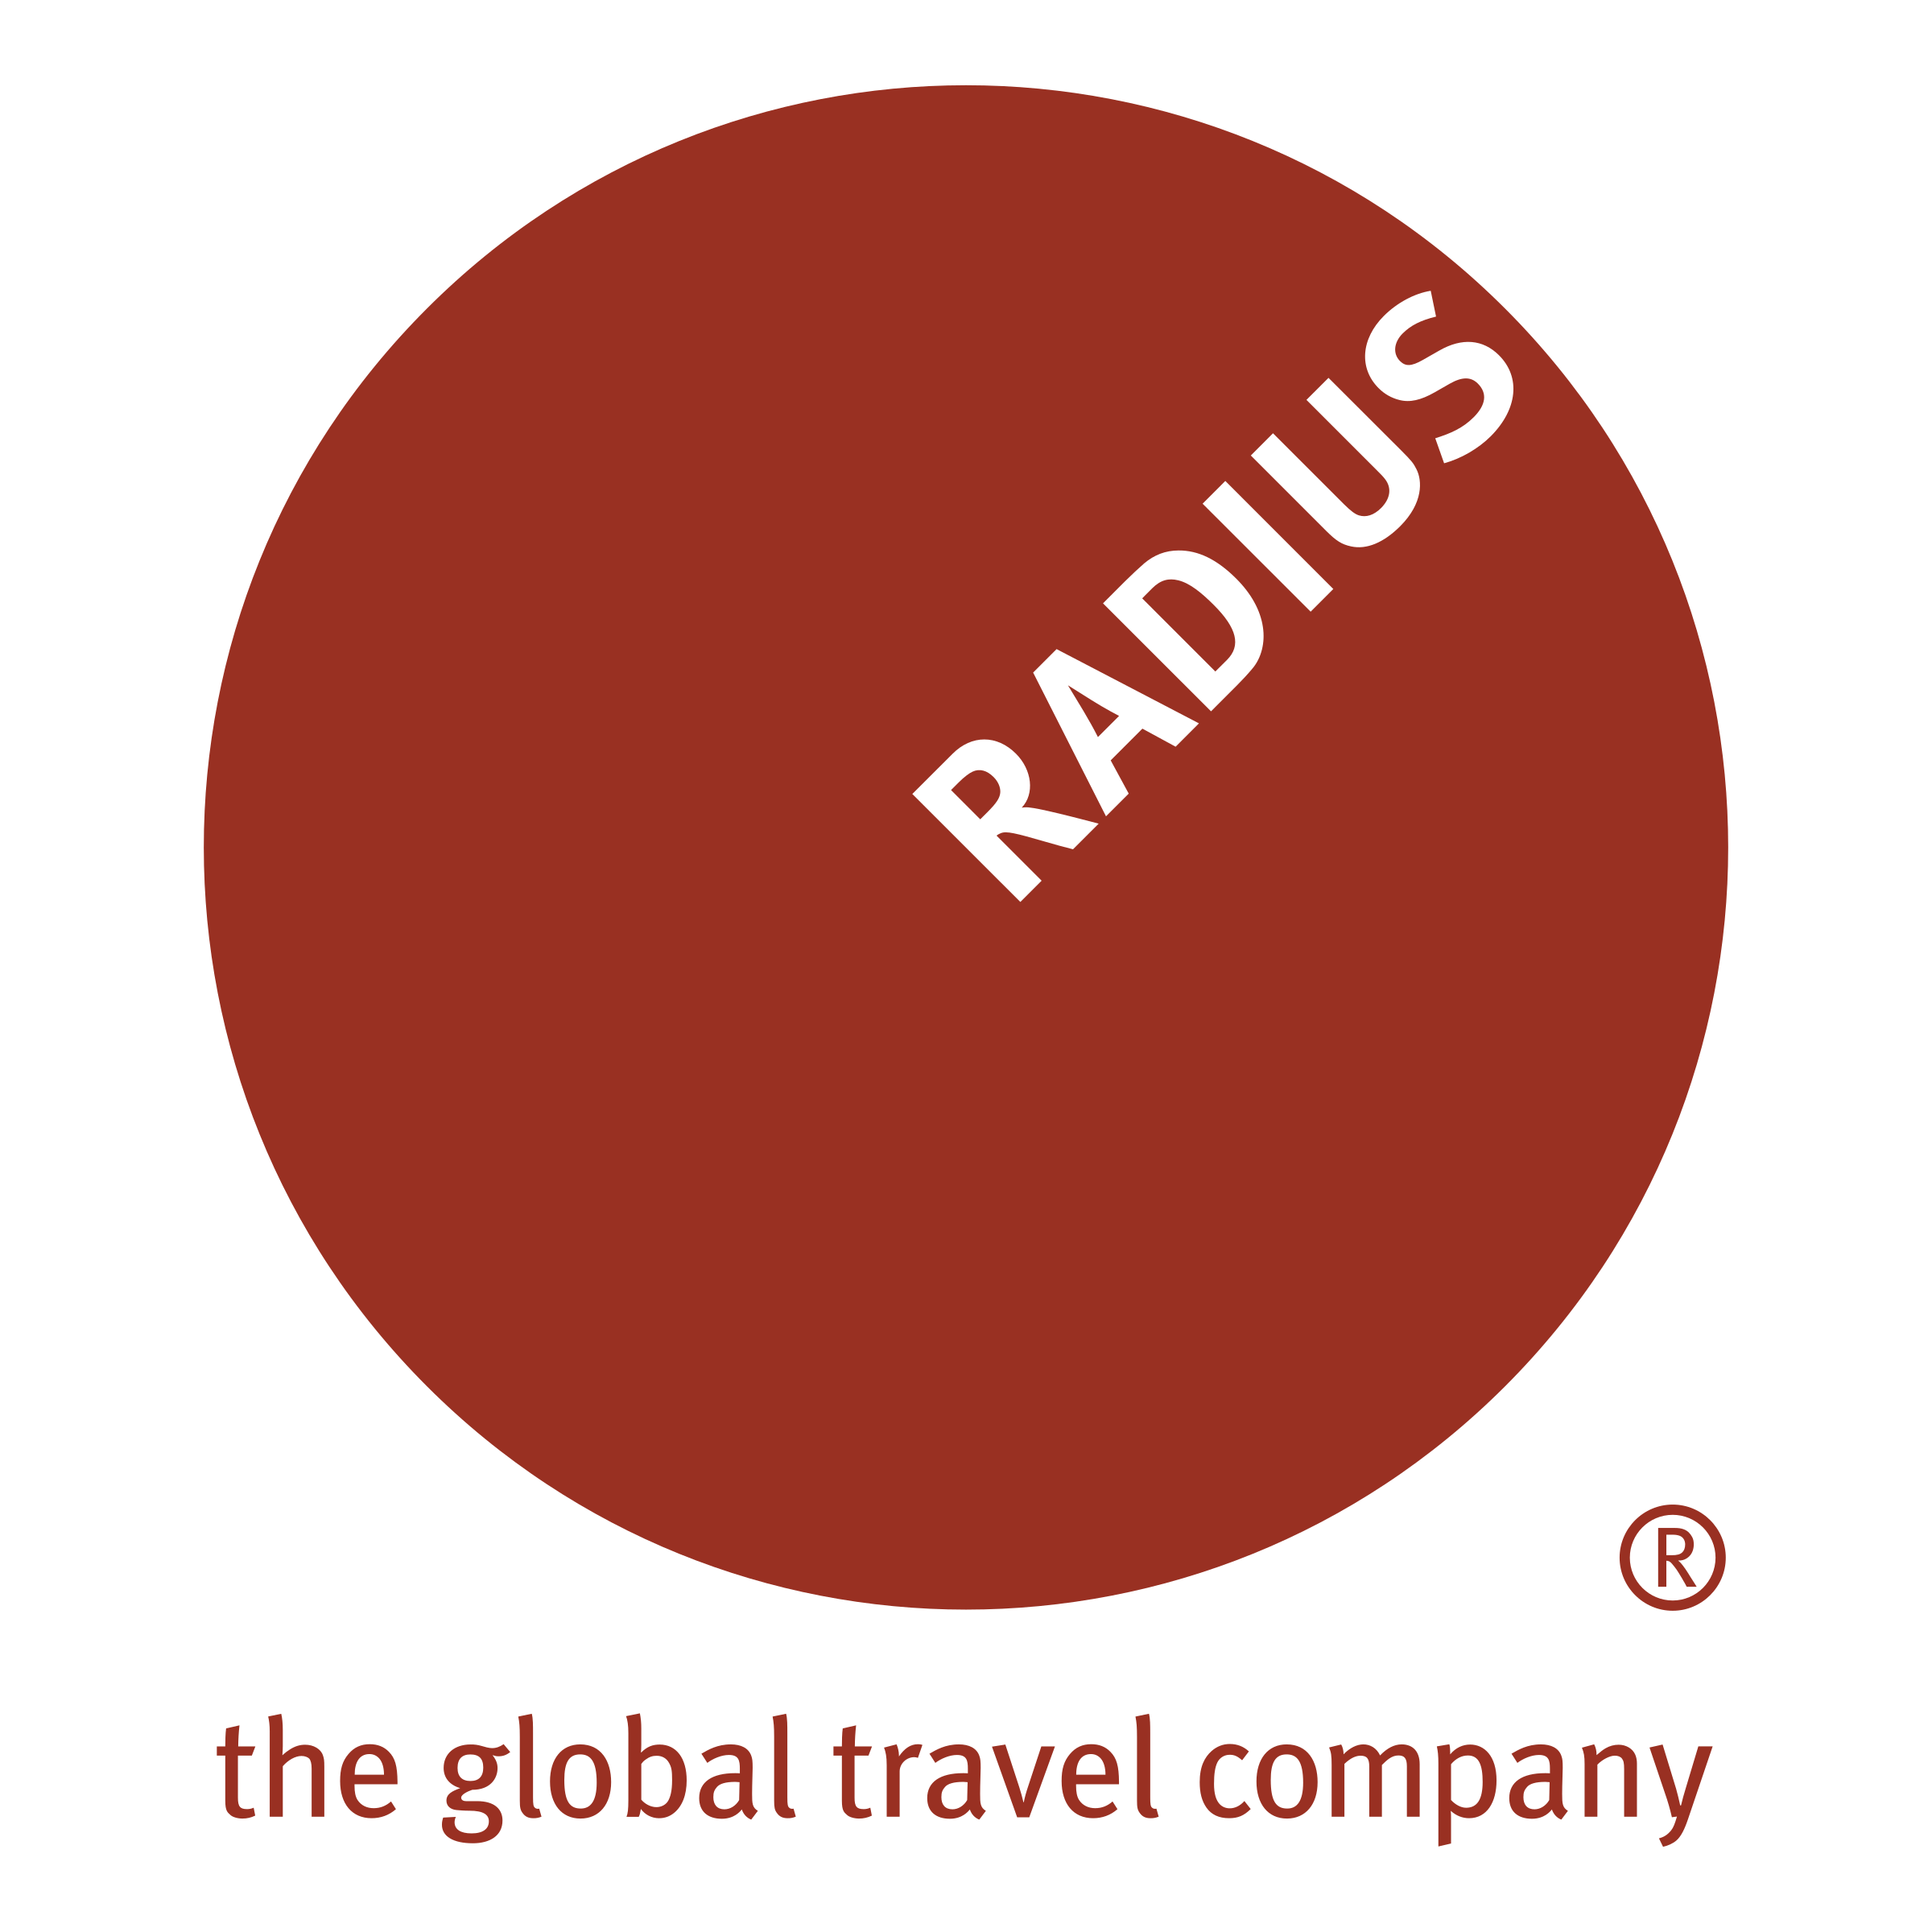 Radius Logo - Radius Logo PNG Transparent & SVG Vector - Freebie Supply